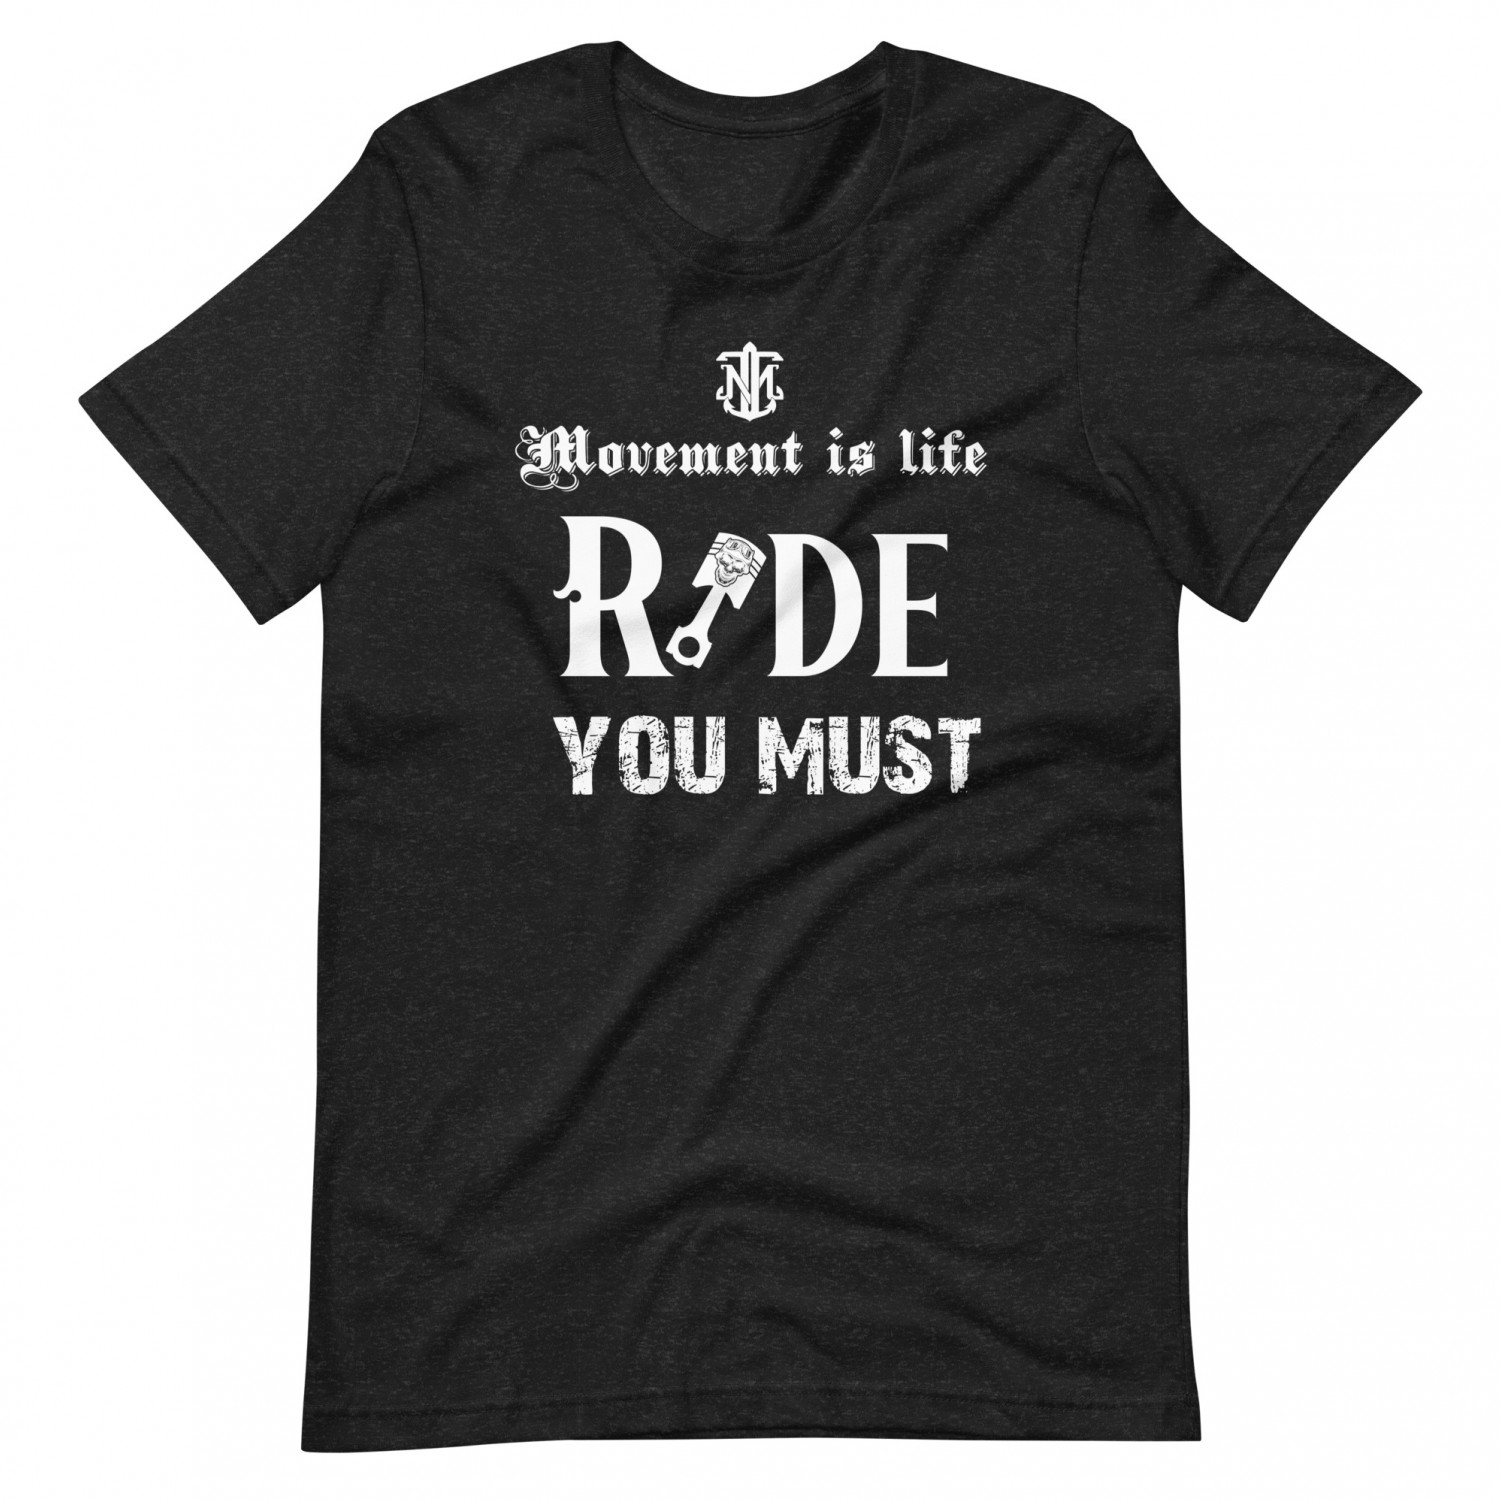 Kup koszulkę Moment is life - Ride You Must